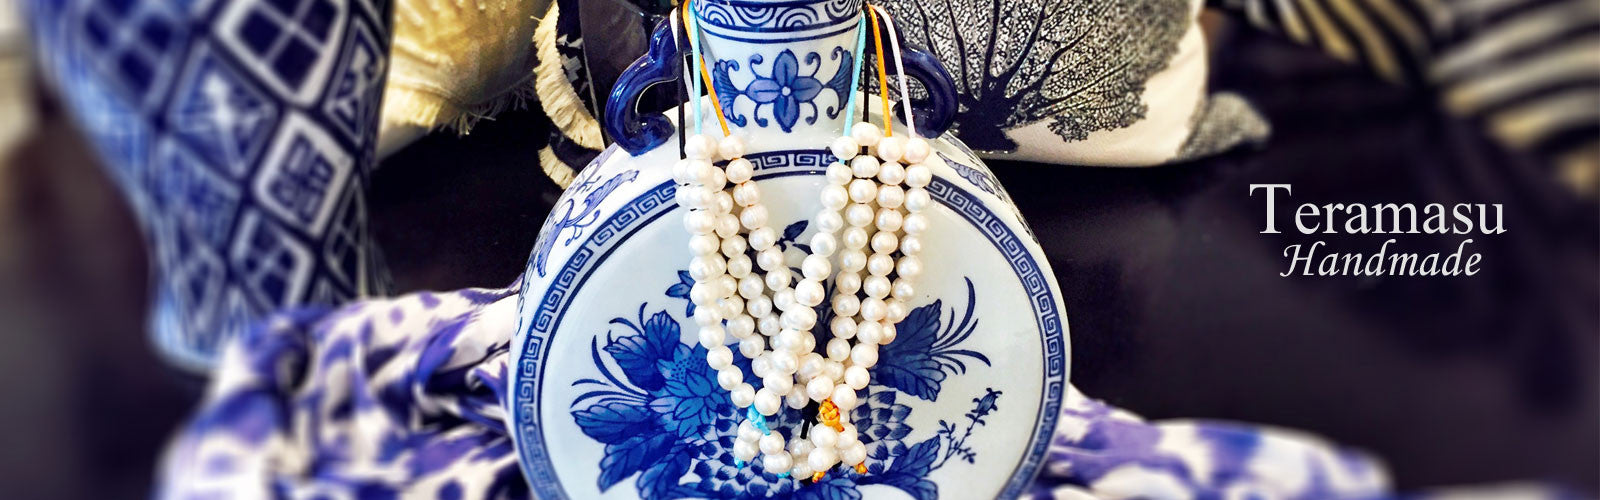 Pearl Choker necklace handmade jewelry by Teramasu